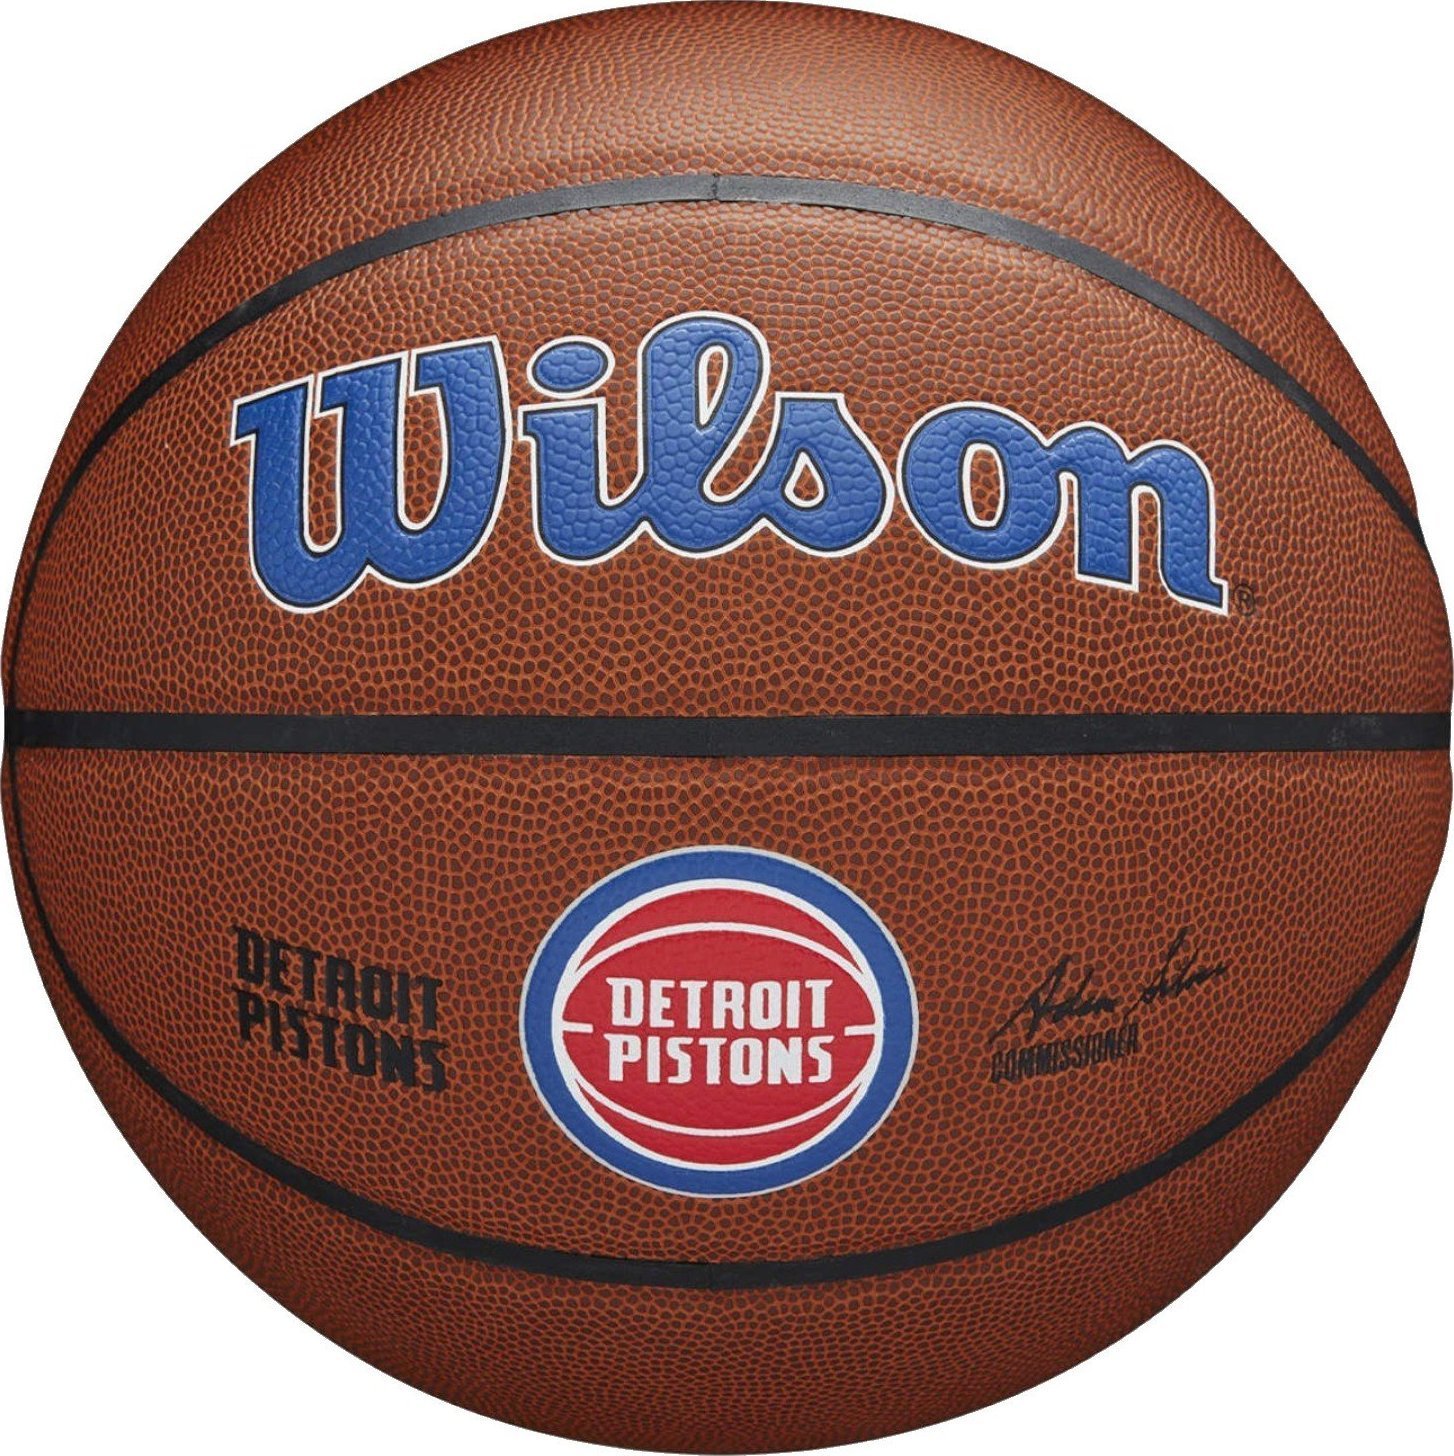 Minge baschet Wilson NBA Team Alliance Detroit Pistons, marime 7